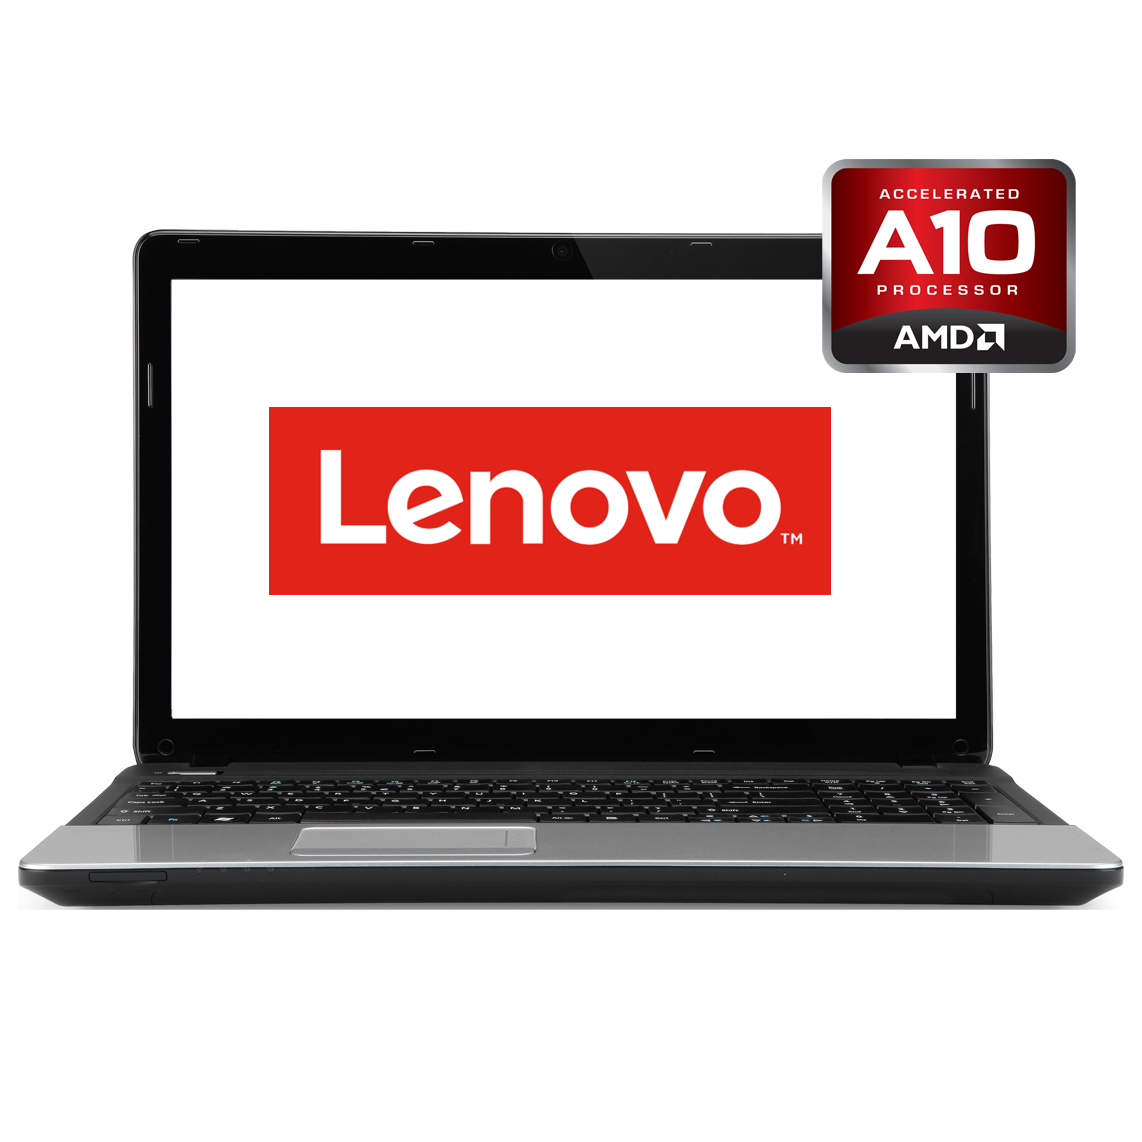 Lenovo - 13 inch AMD A10